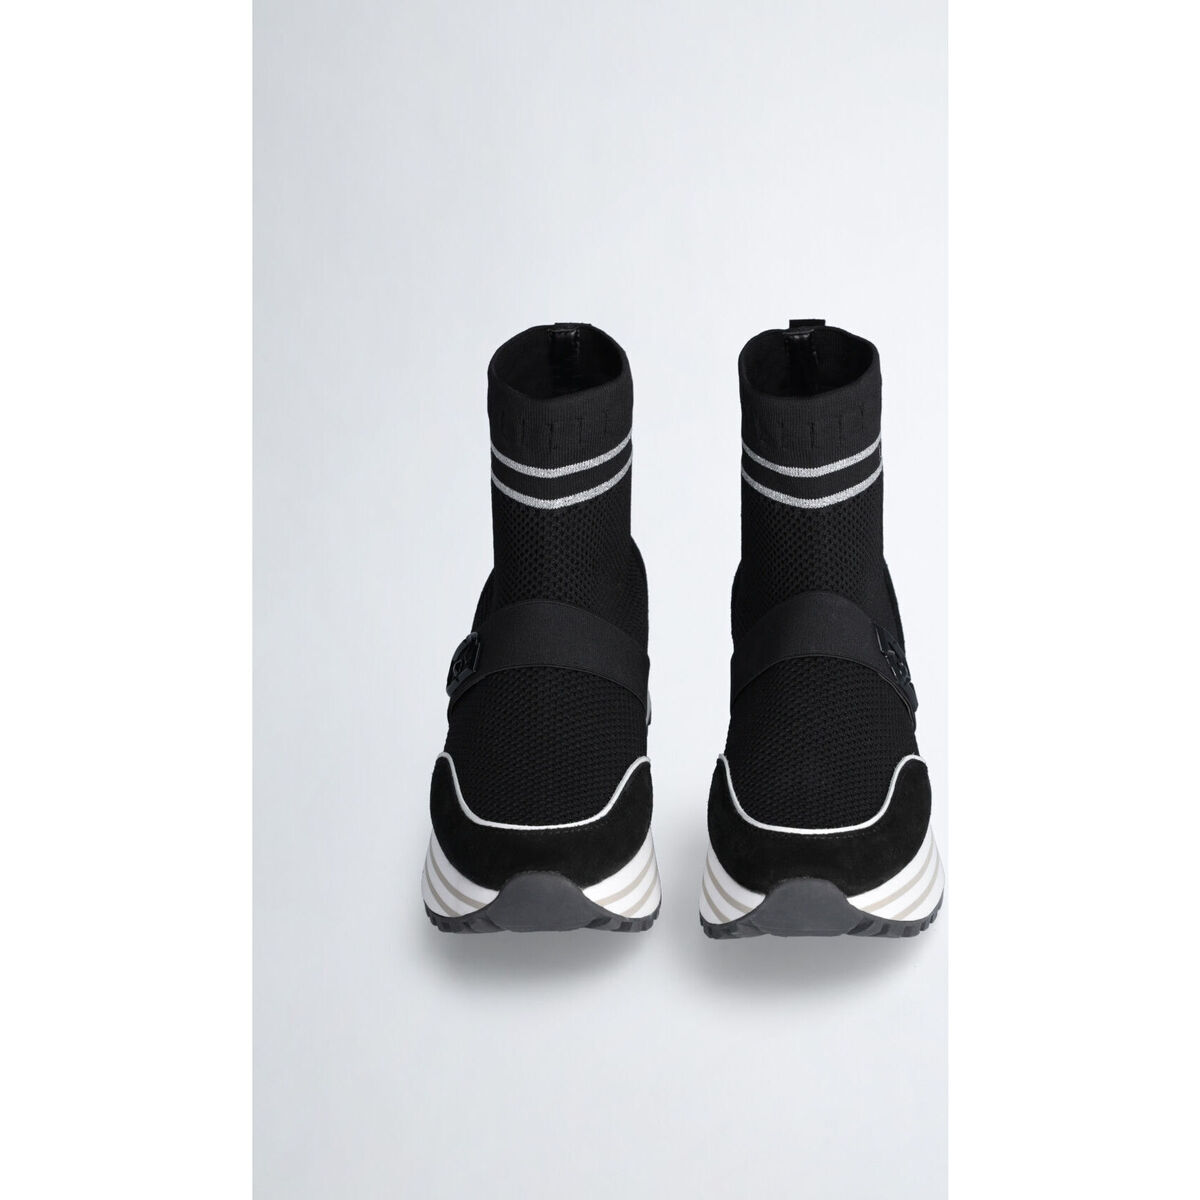 Liu Jo Noir Sneakers chaussettes avec logo DG2YzvYm